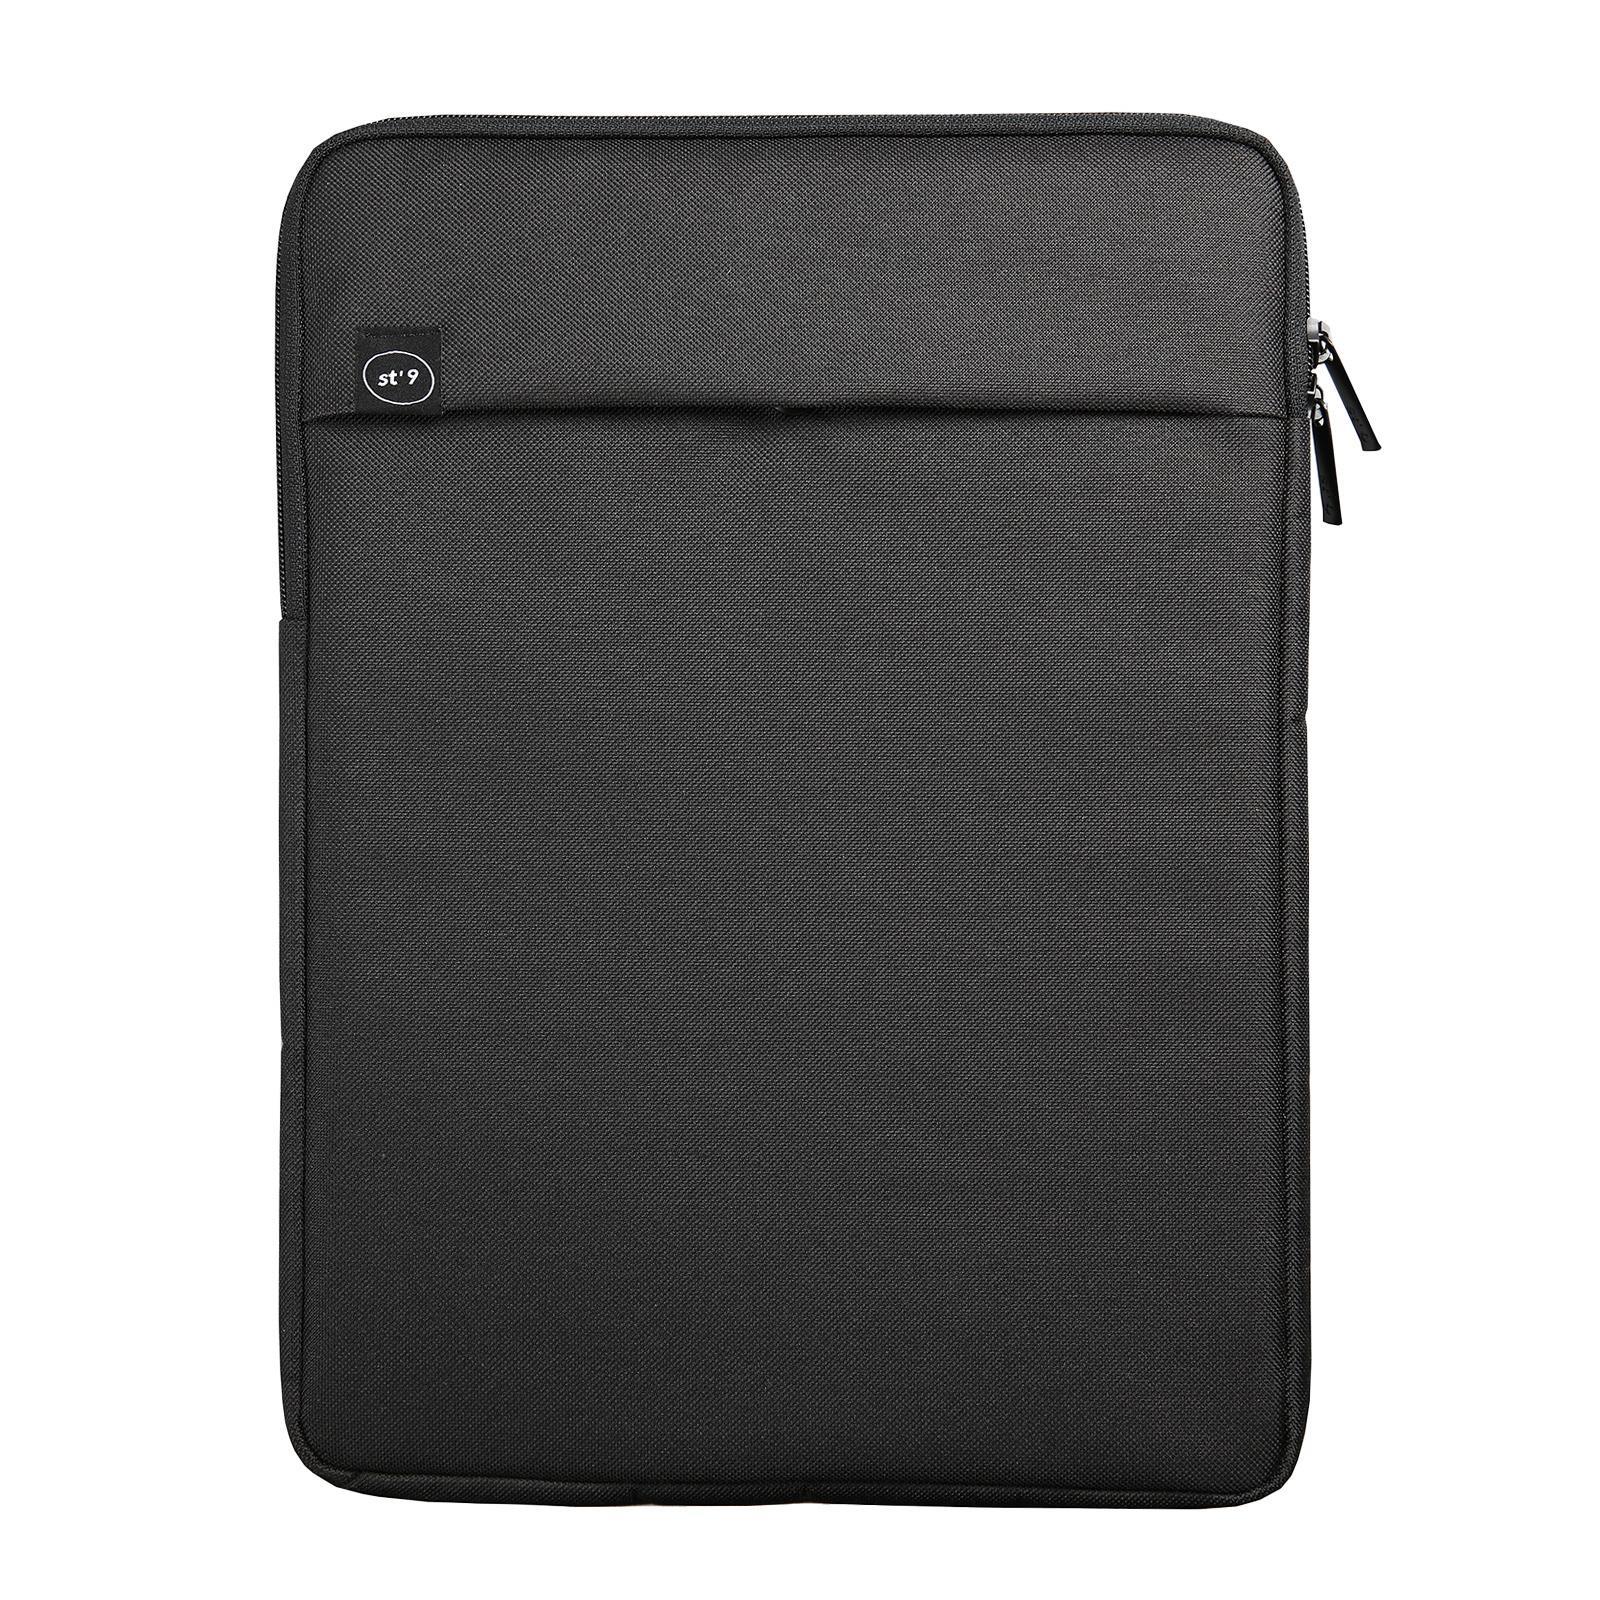 ST9 L size 15 inch Black Laptop Sleeve Padded Travel Carry Case Bag LUKE